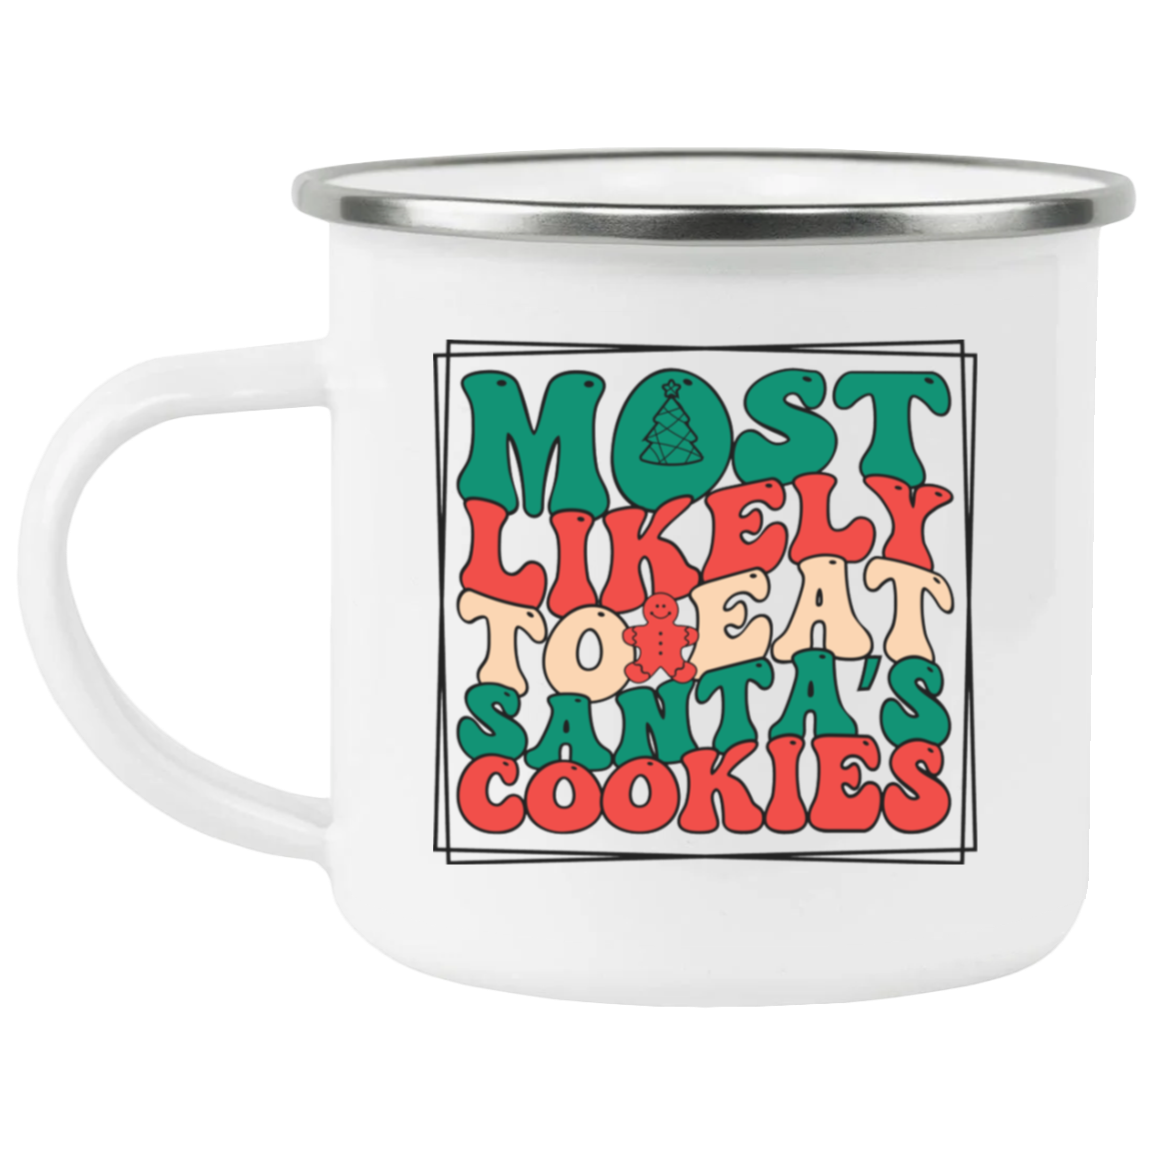 Most Likely To Eat Santas Cookies Mug